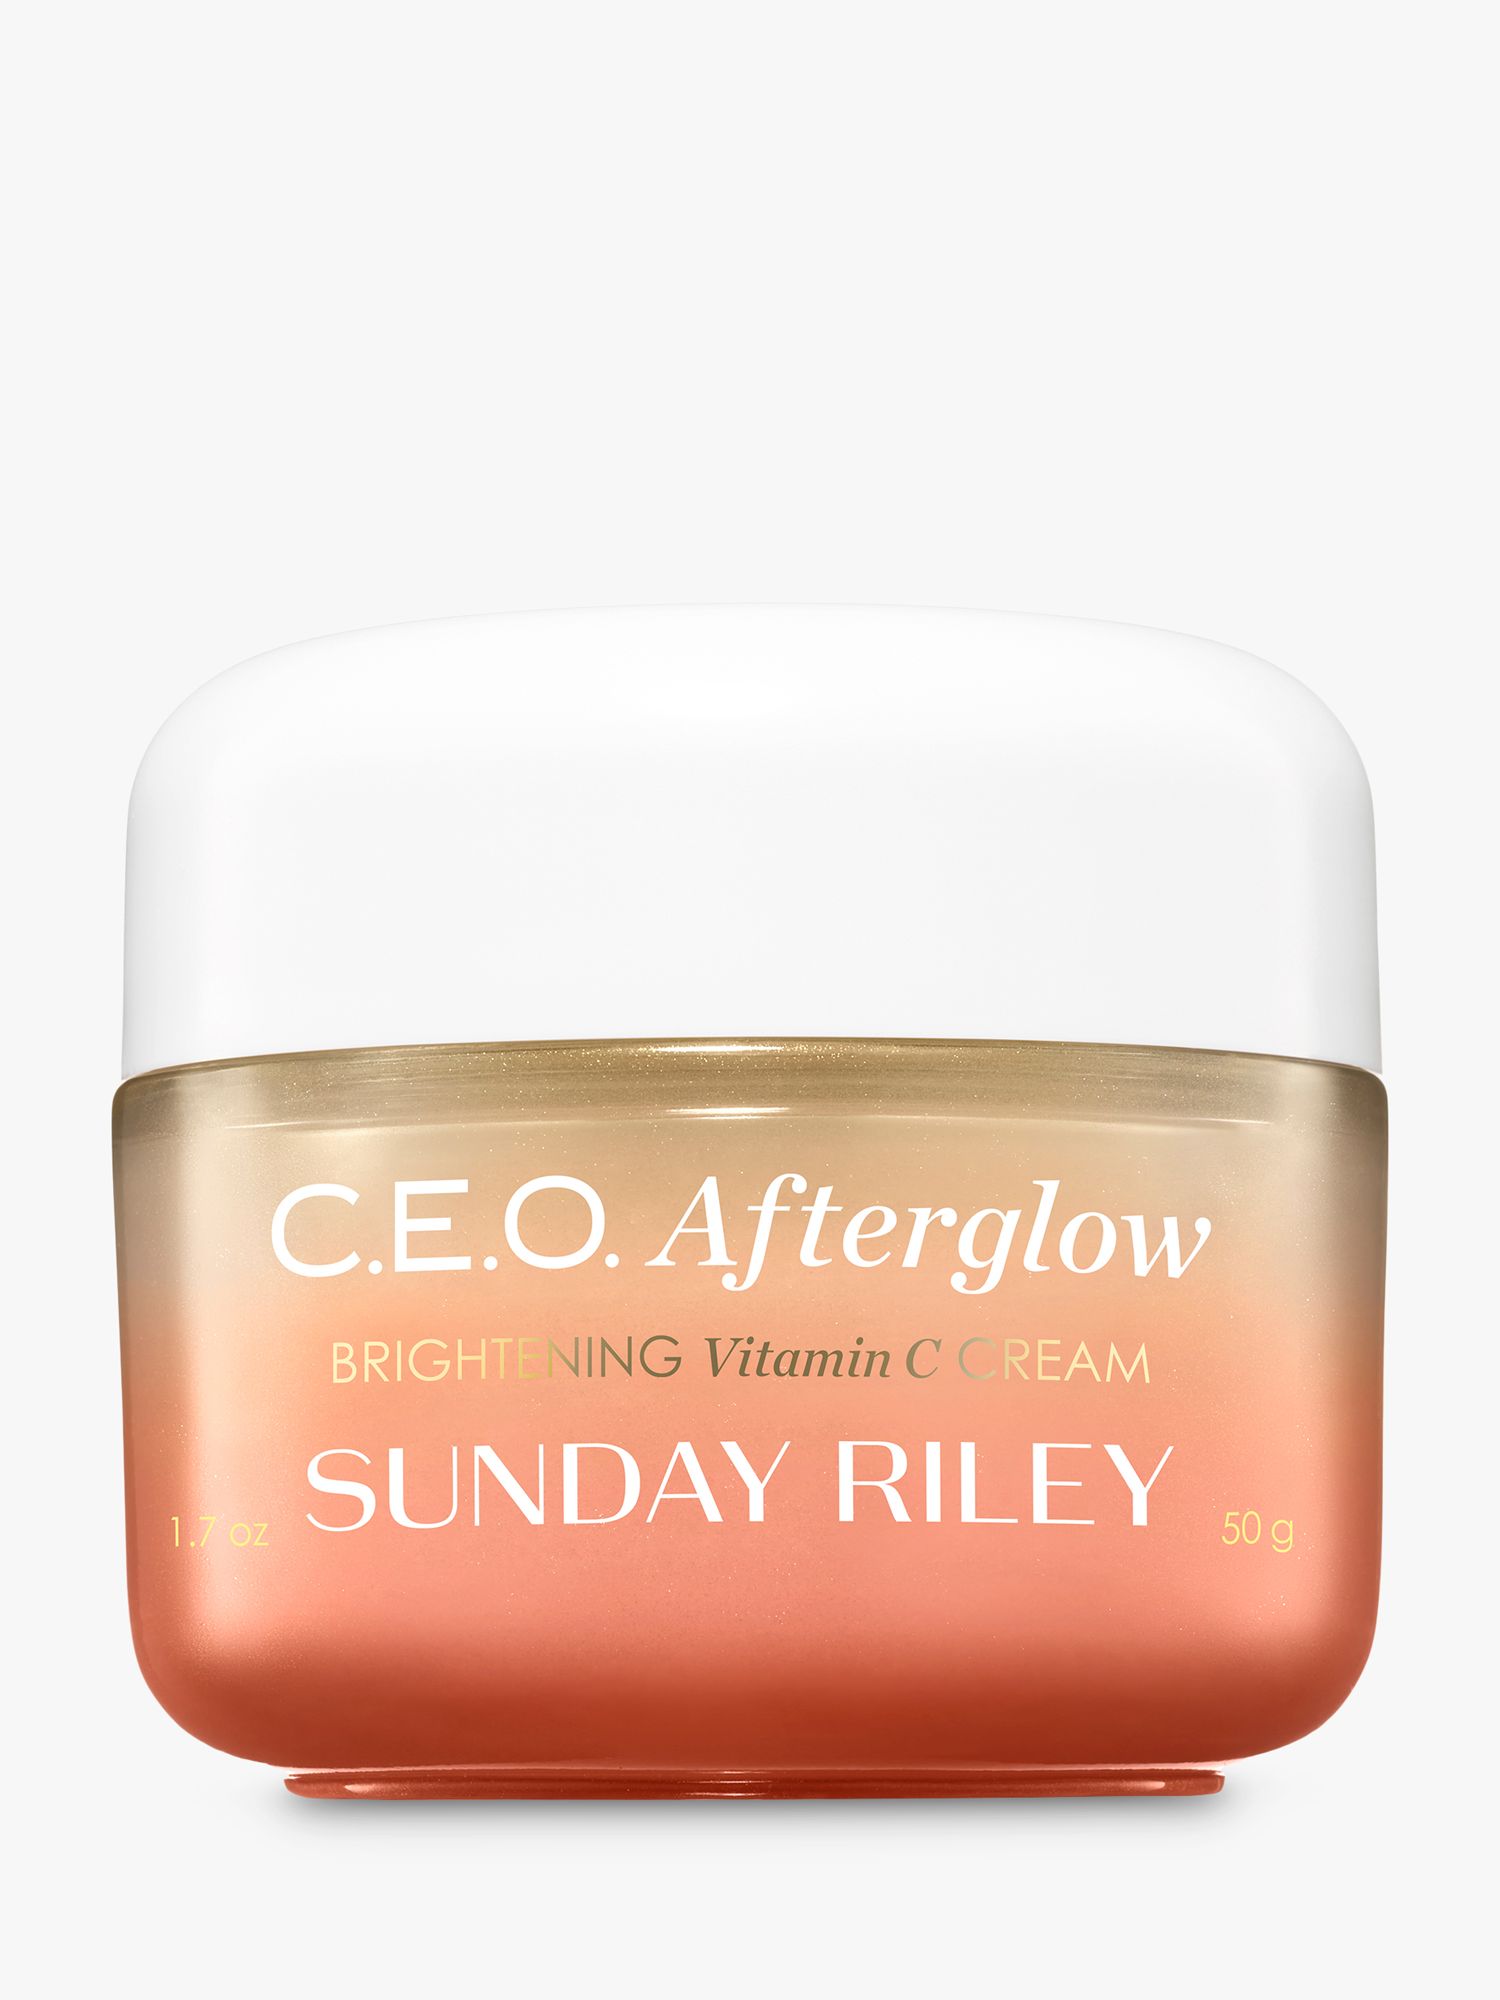 Sunday Riley C.E.O. Afterglow Brightening Vitamin C Gel Cream, 50g